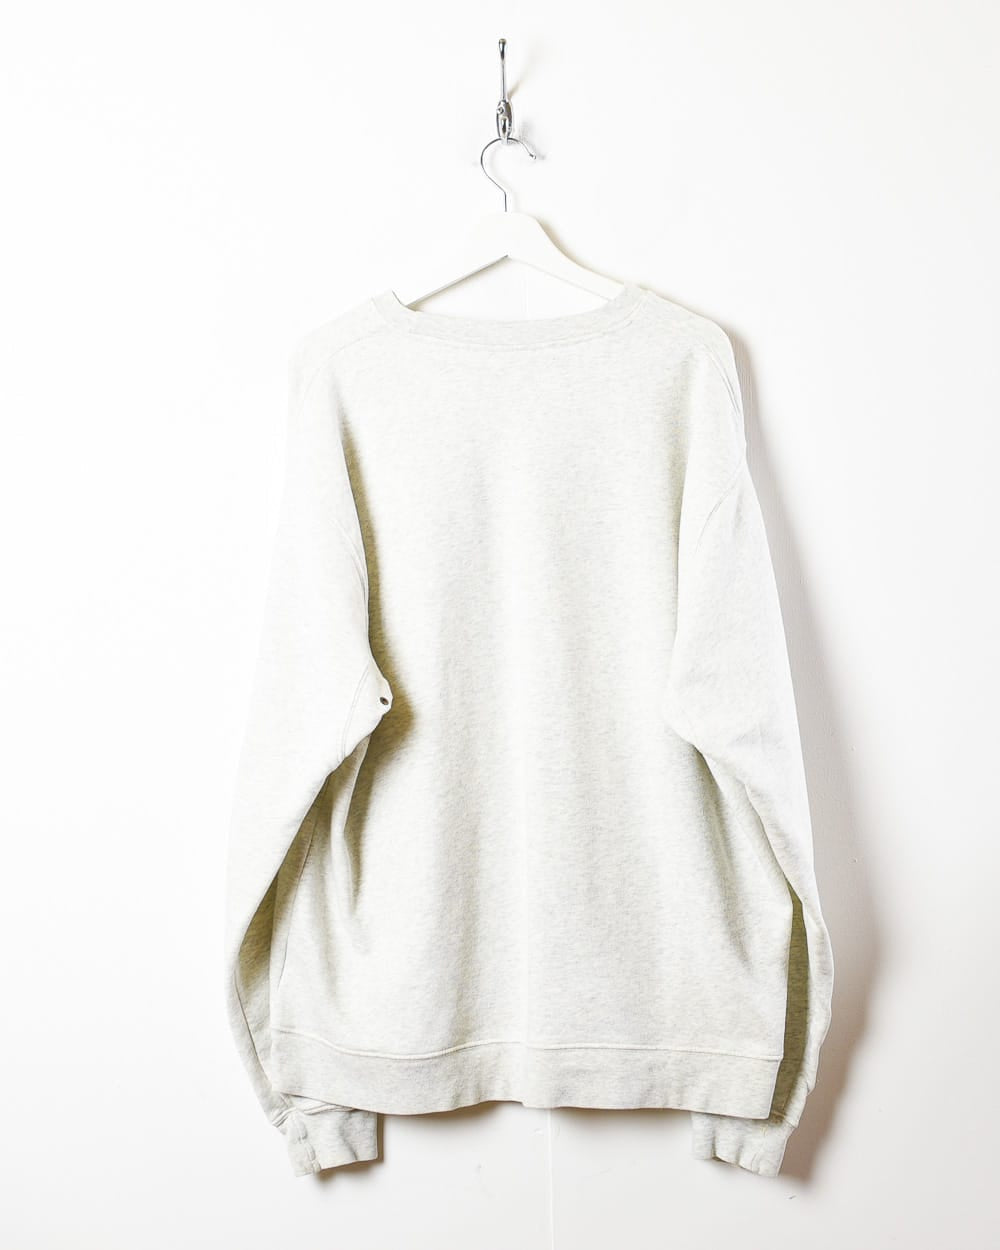 Stone Timberland Sweatshirt - X-Large